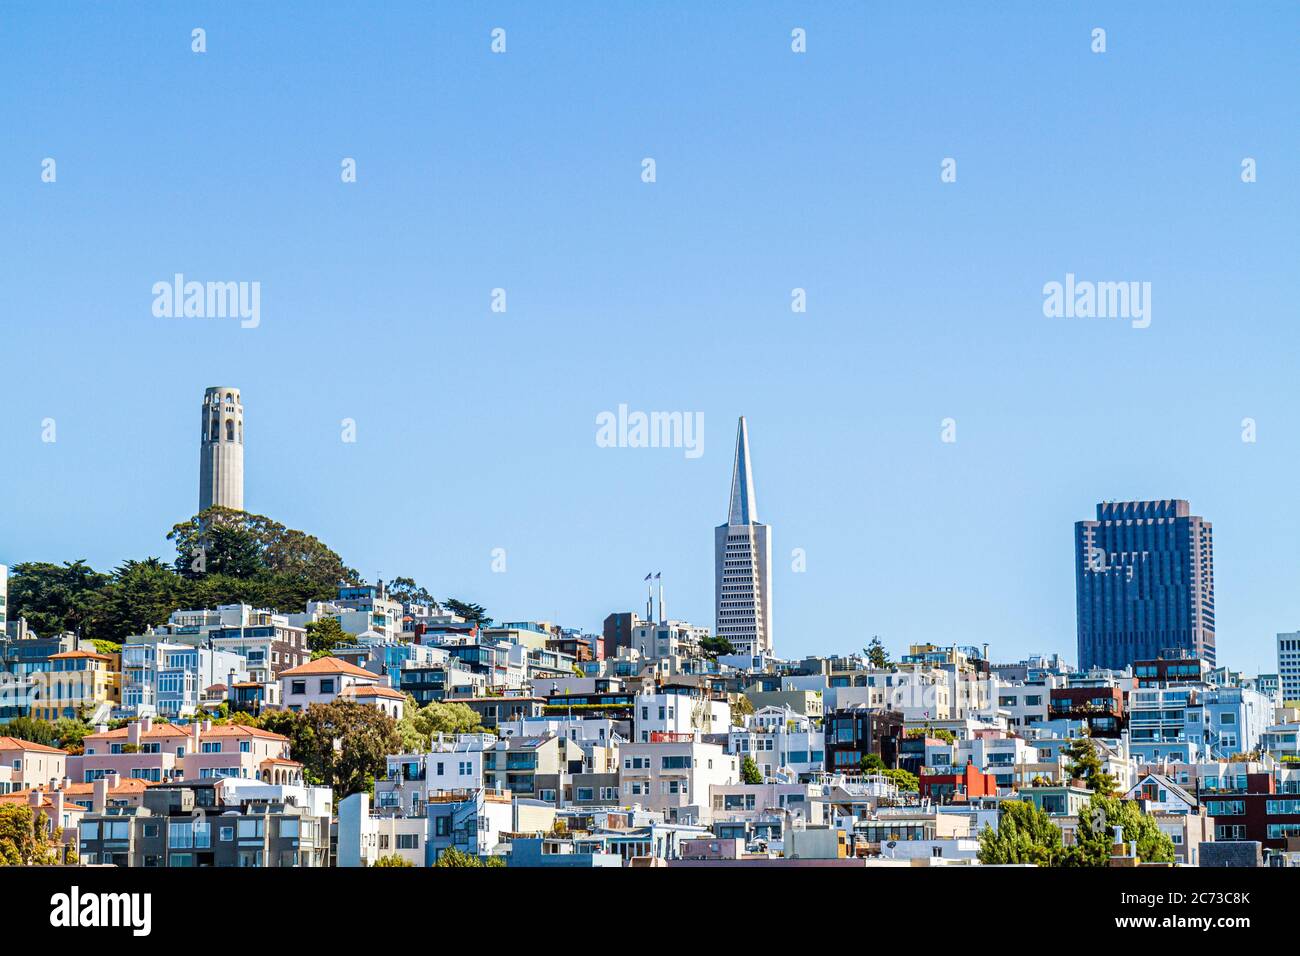 San Francisco California, Telegraph Hill quartier, Coit Tower, Skylineart déco, bâtiment, ciel bleu clair, Arthur Brown, Henry Howard, Transamerica Pyramid Banque D'Images